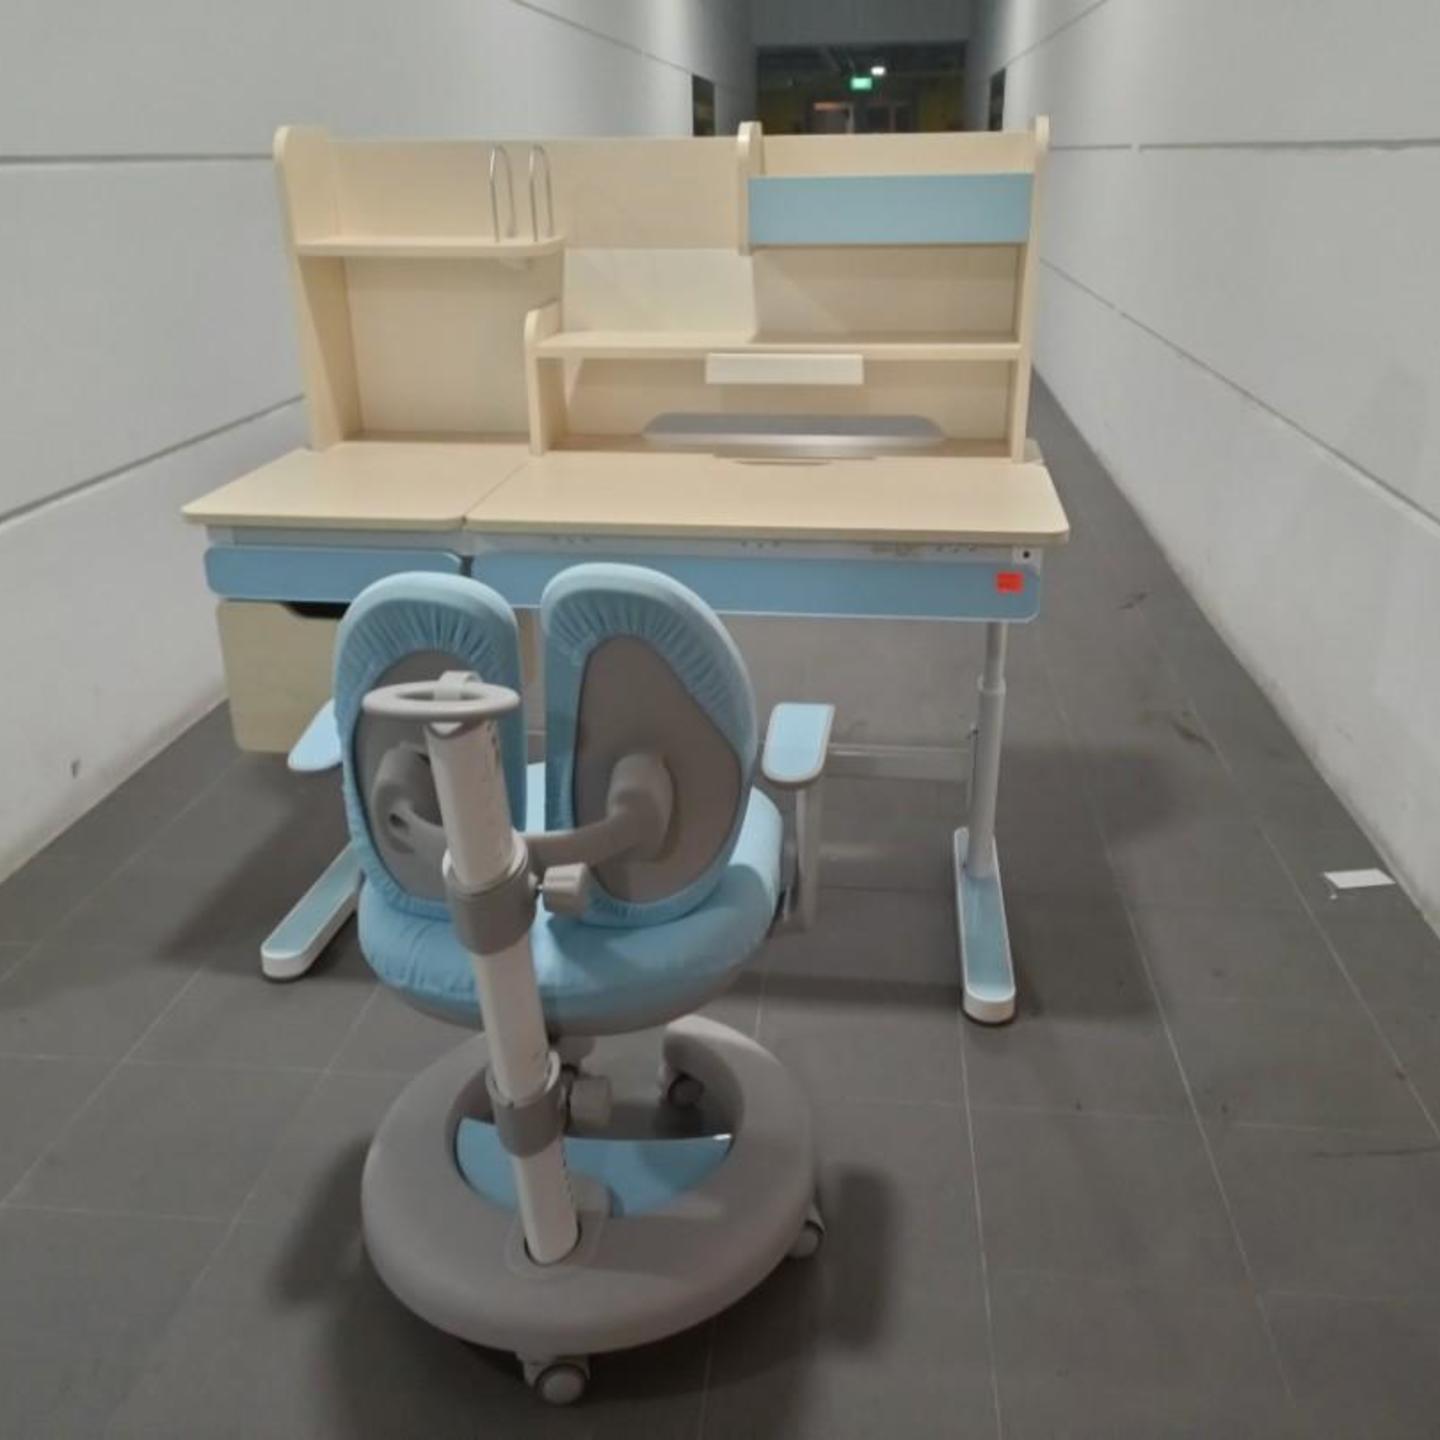 QUINCY Adjustable Children's Study Desk with Ergonomic Study Chair in BLUE